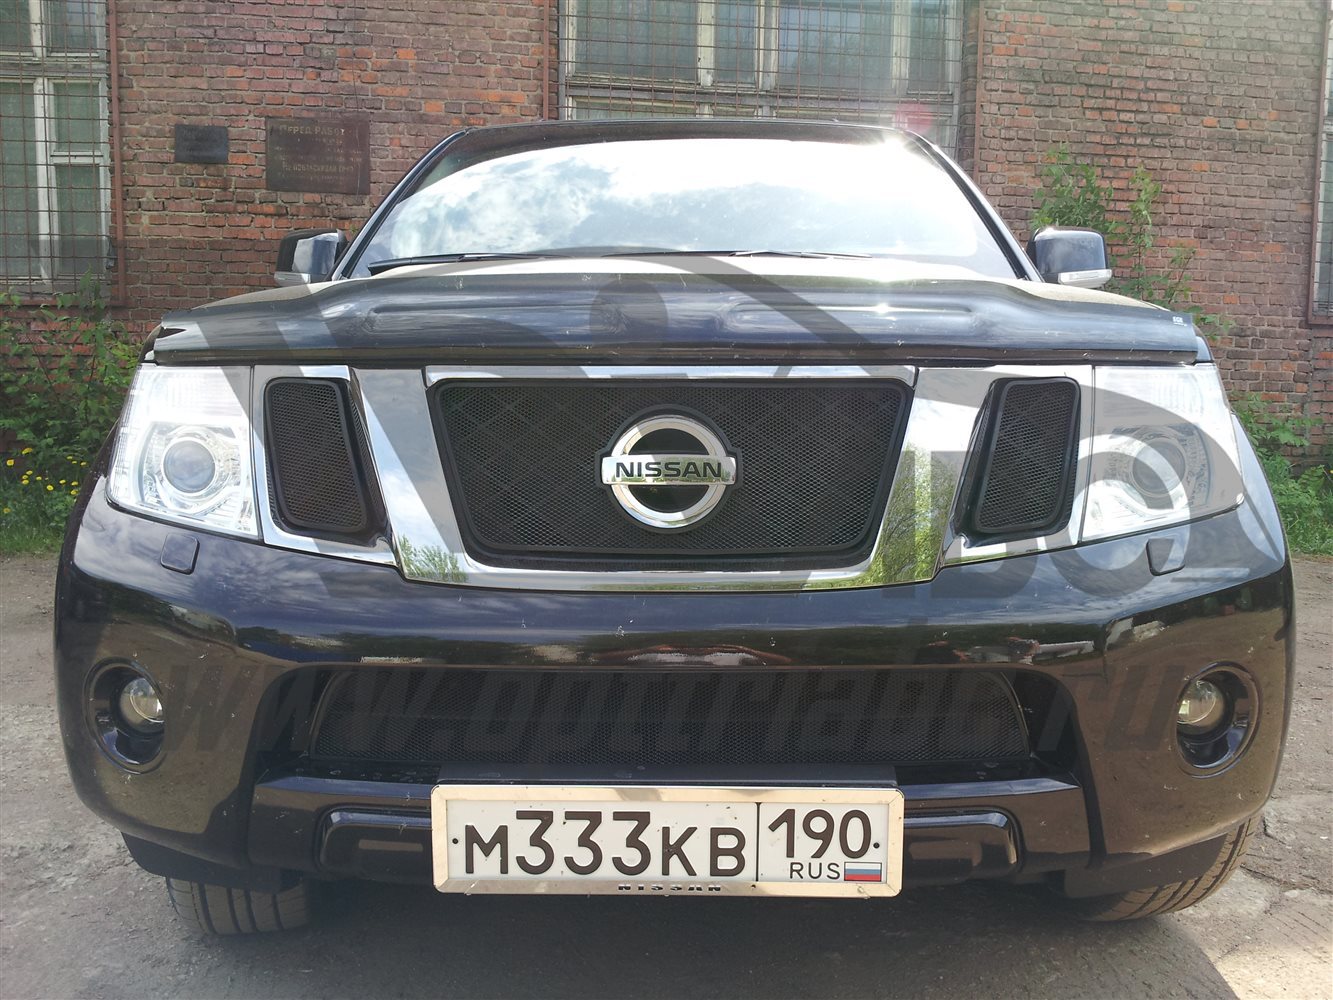 Защита радиатора Nissan Pathfinder 2010-2014 (Black)